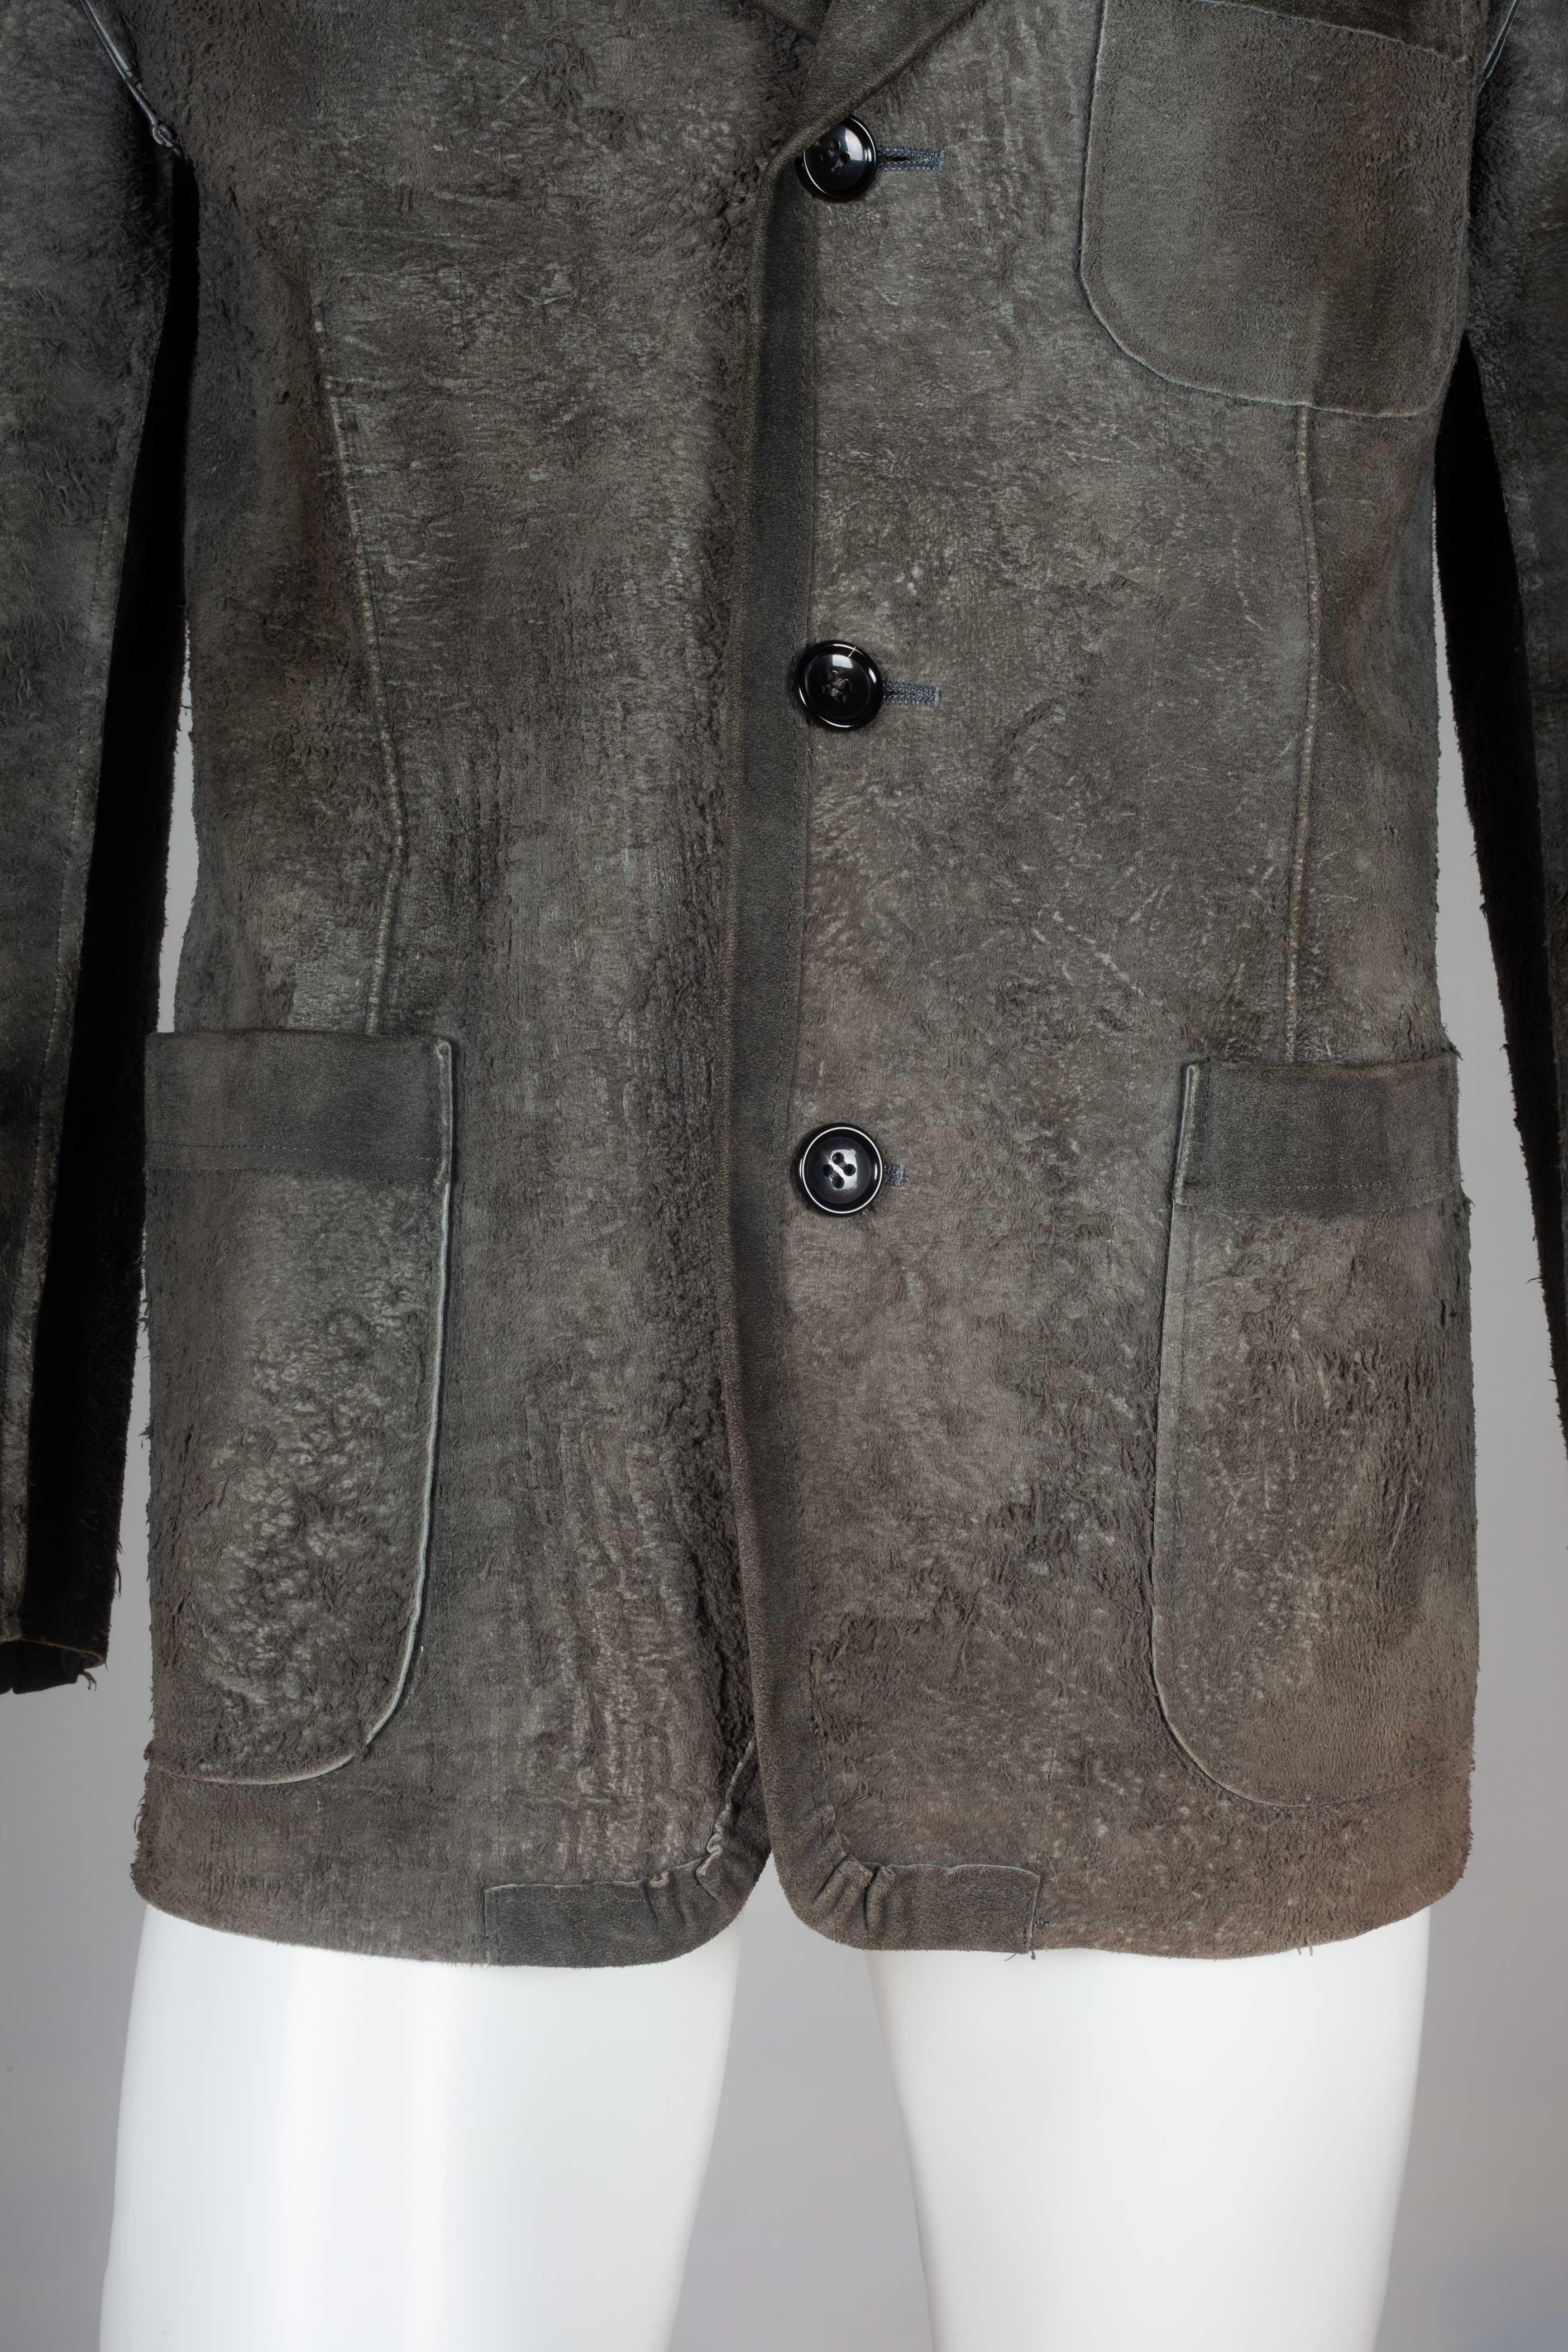 omme des Garçons Distressed Leather Single-Breasted Jacket, 2002 7